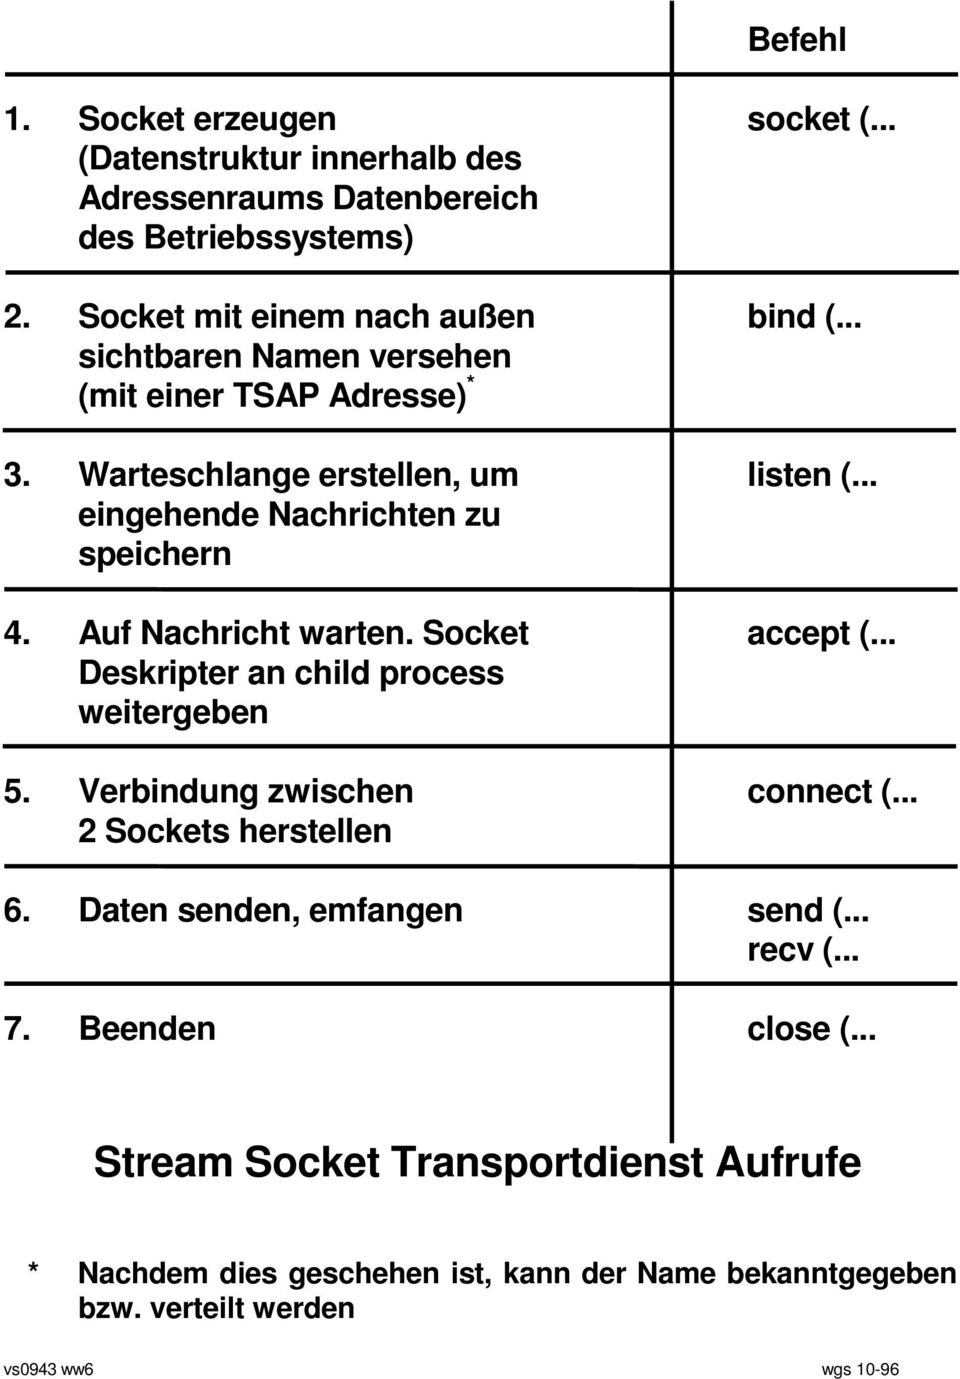 Socket accept (... Deskripter an child process weitergeben 5. Verbindung zwischen connect (... 2 Sockets herstellen 6. Daten senden, emfangen send (... recv (.